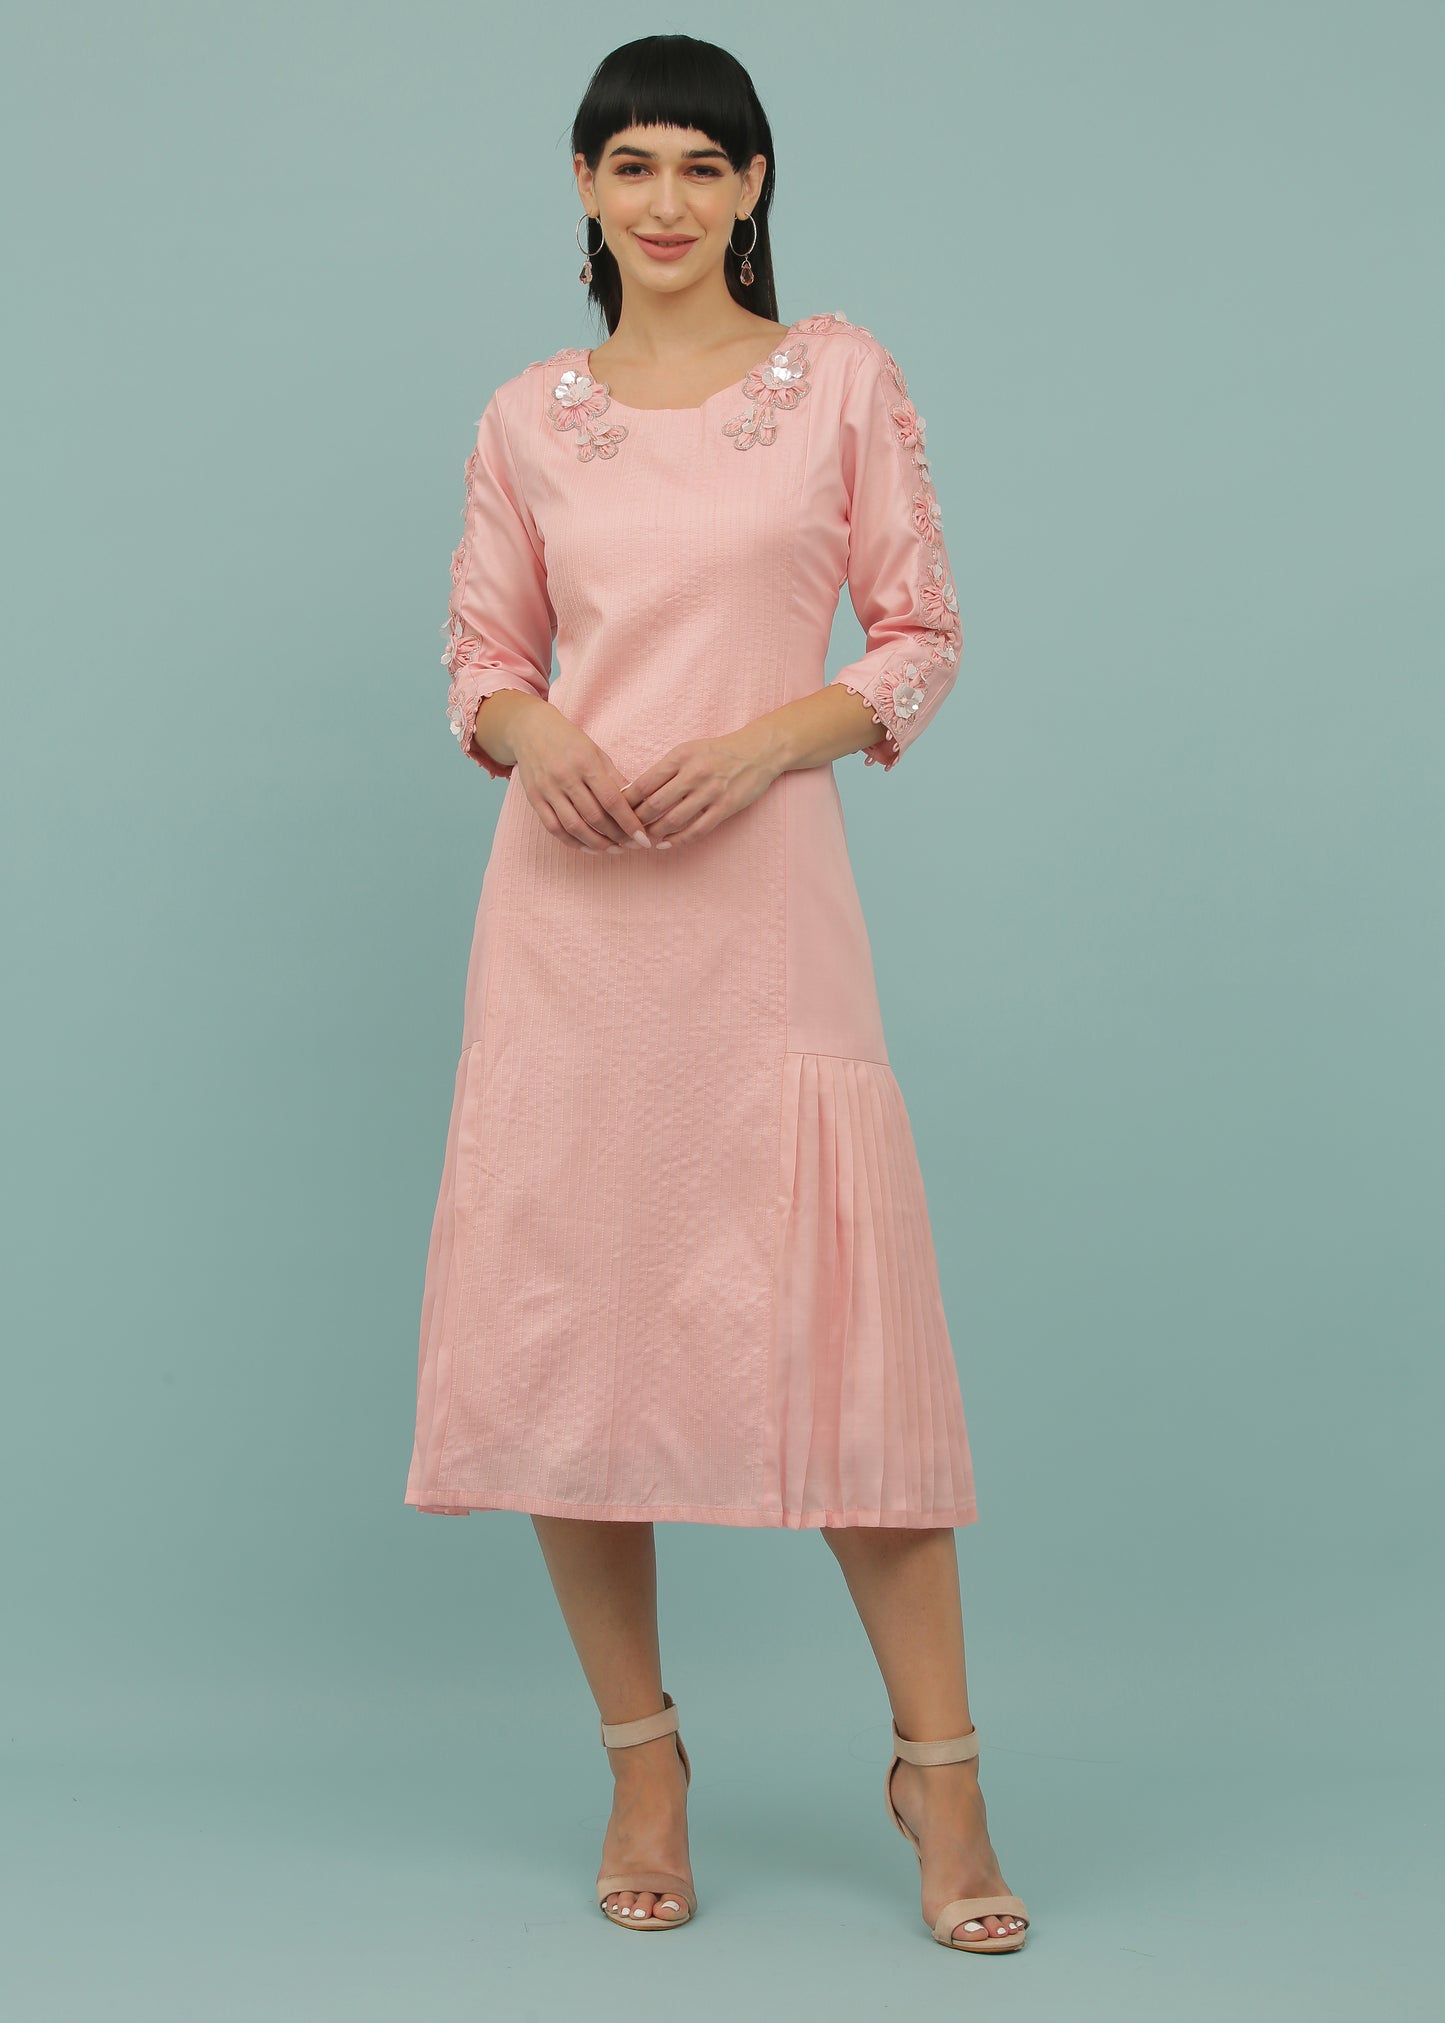 Blush Pink A-Line Dress